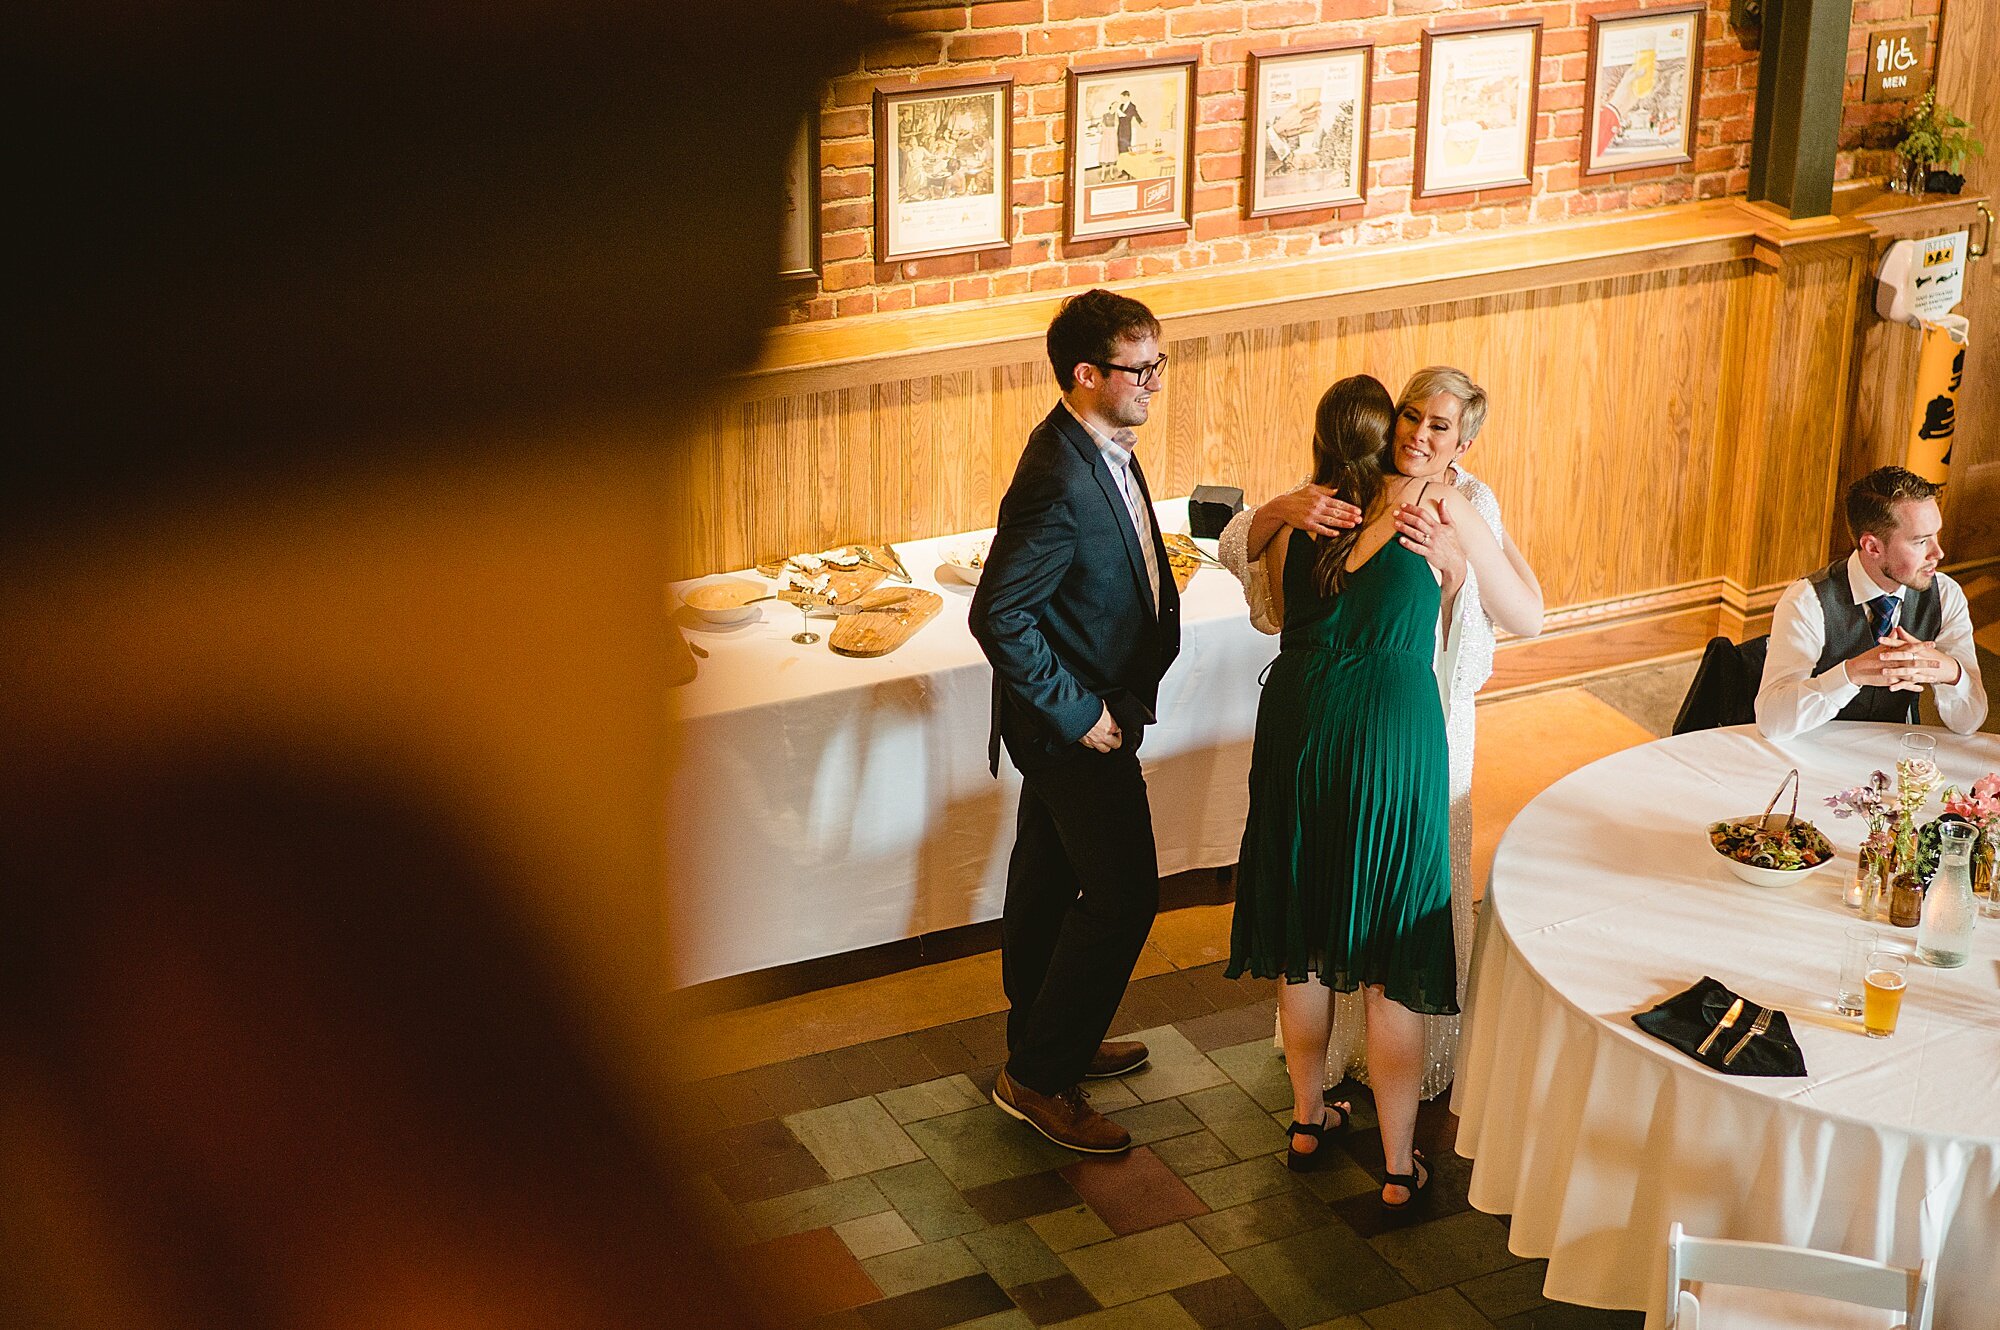 Kalamazoo Wedding at Bell's Eccentric Cafe - Photography by Ryan Inman 60.jpg